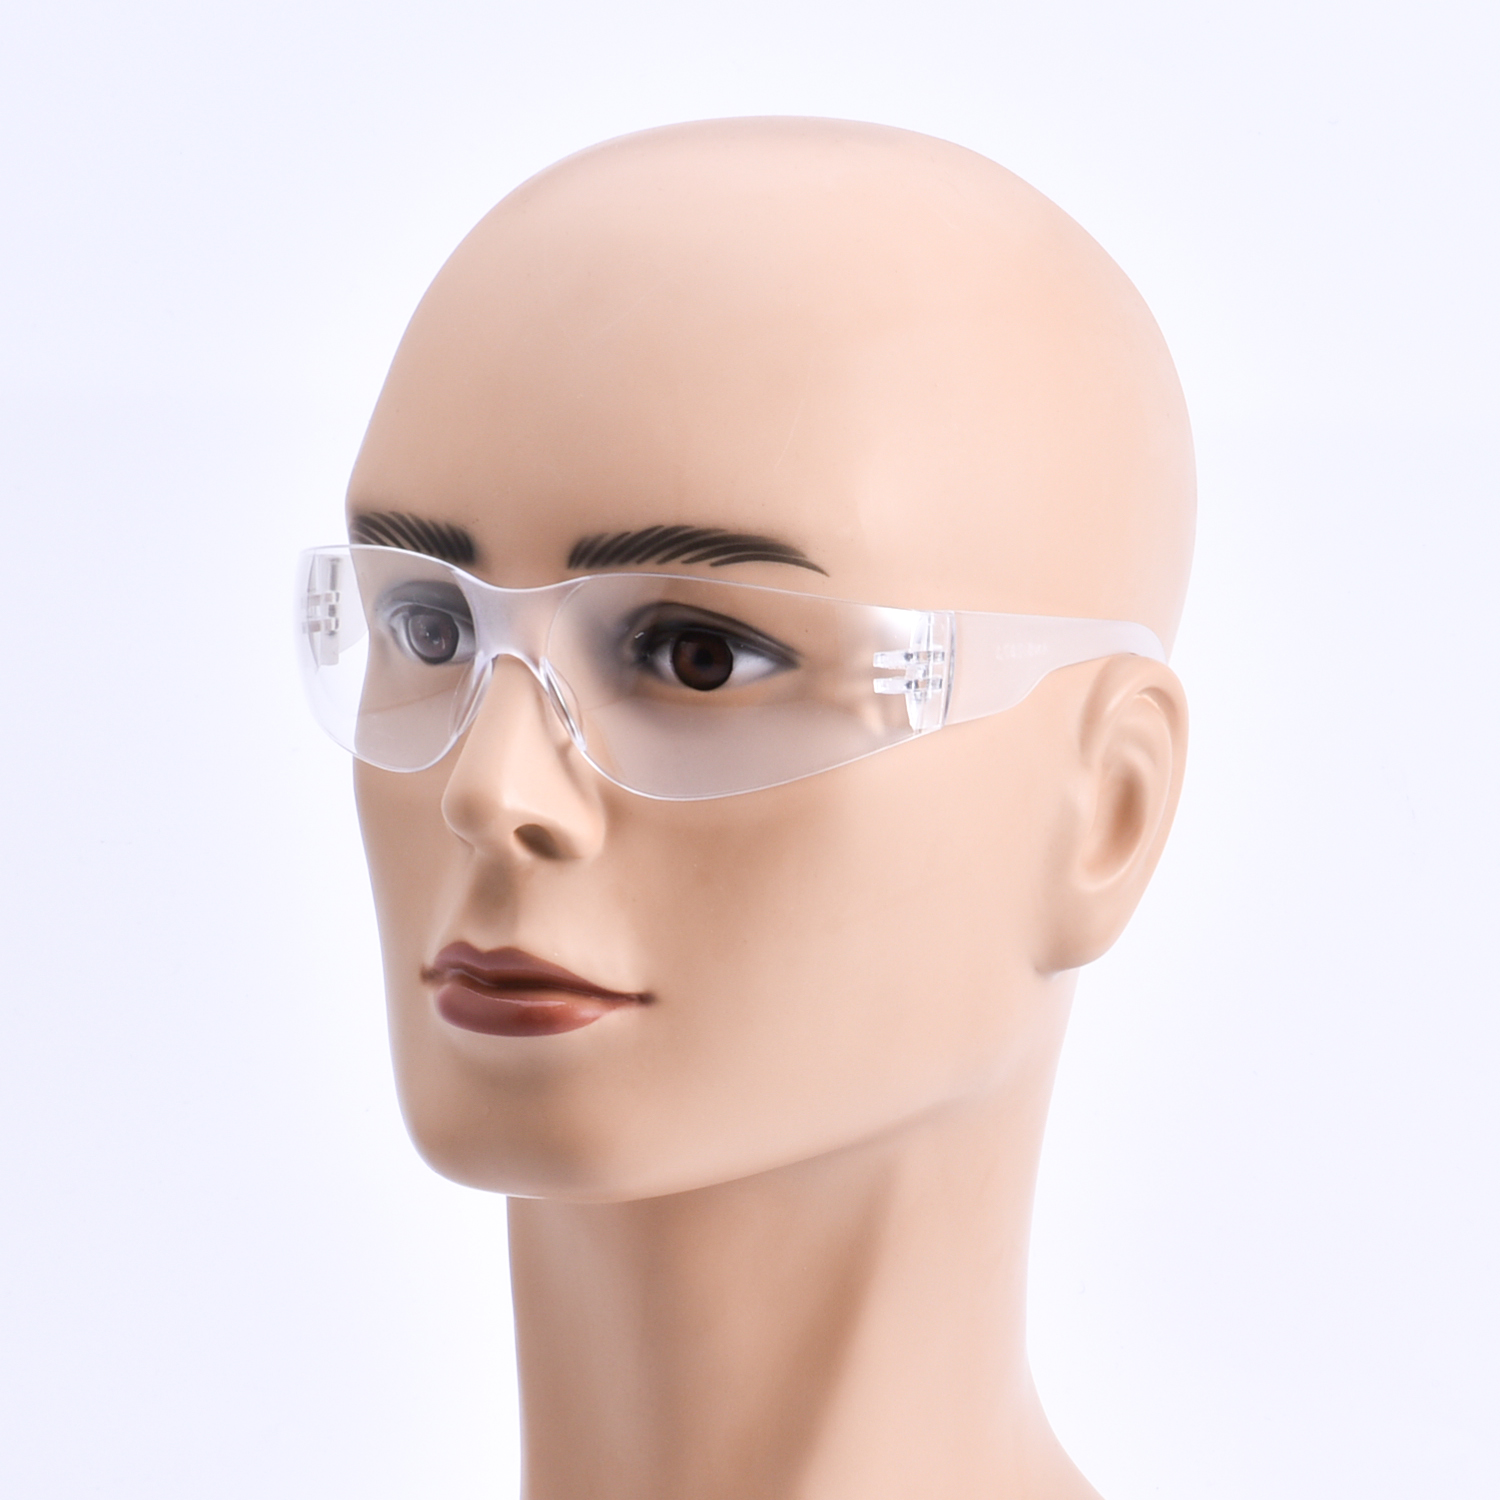 ANSI Z87 Approved Safety Glasses SG001